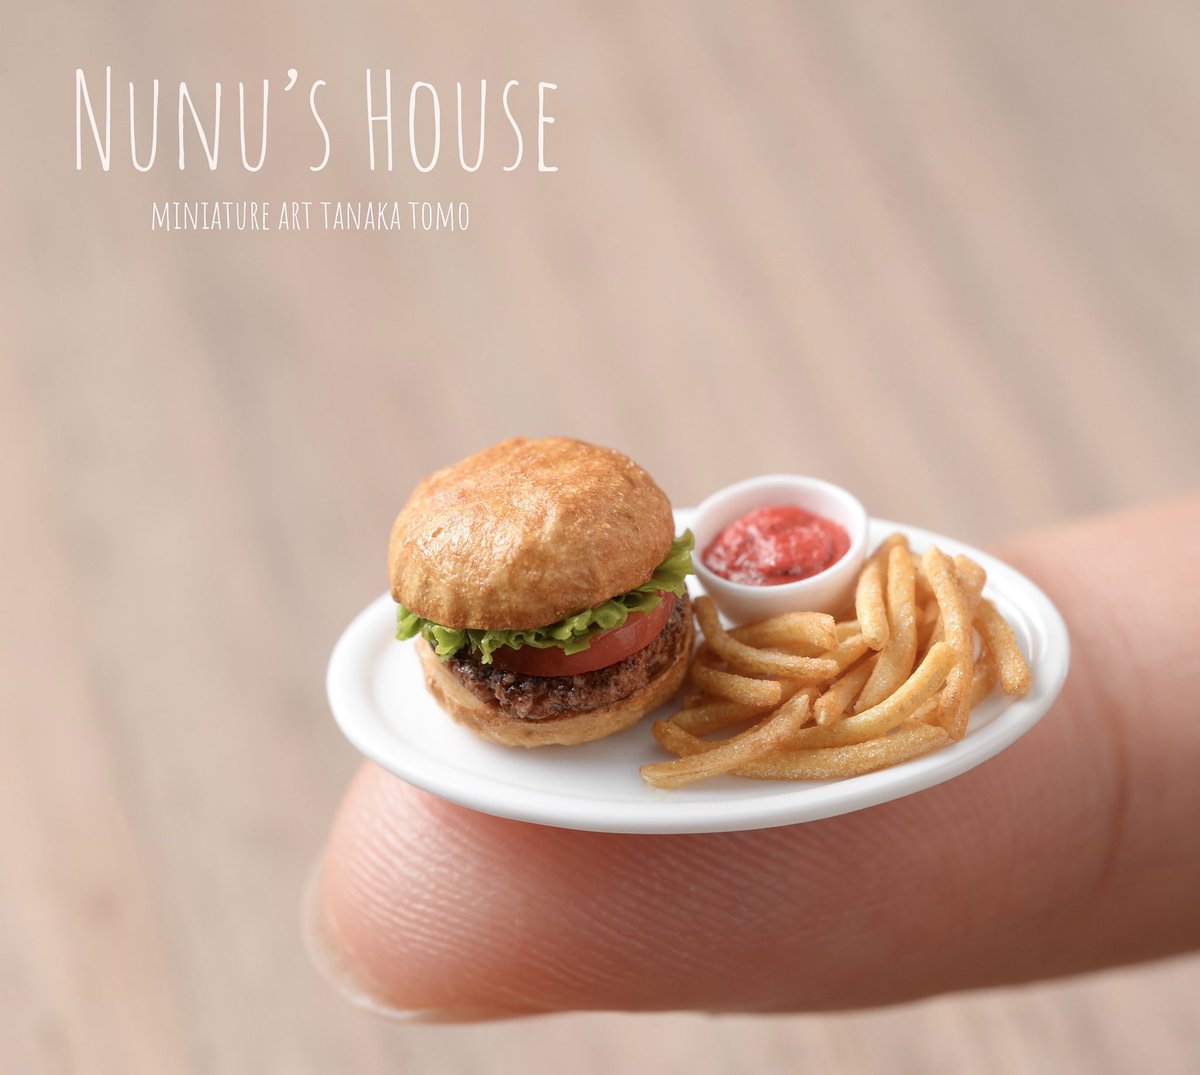 Nunu S House 田中智 絶対にお腹いっぱいに なる事のないハンバーガー を作りました